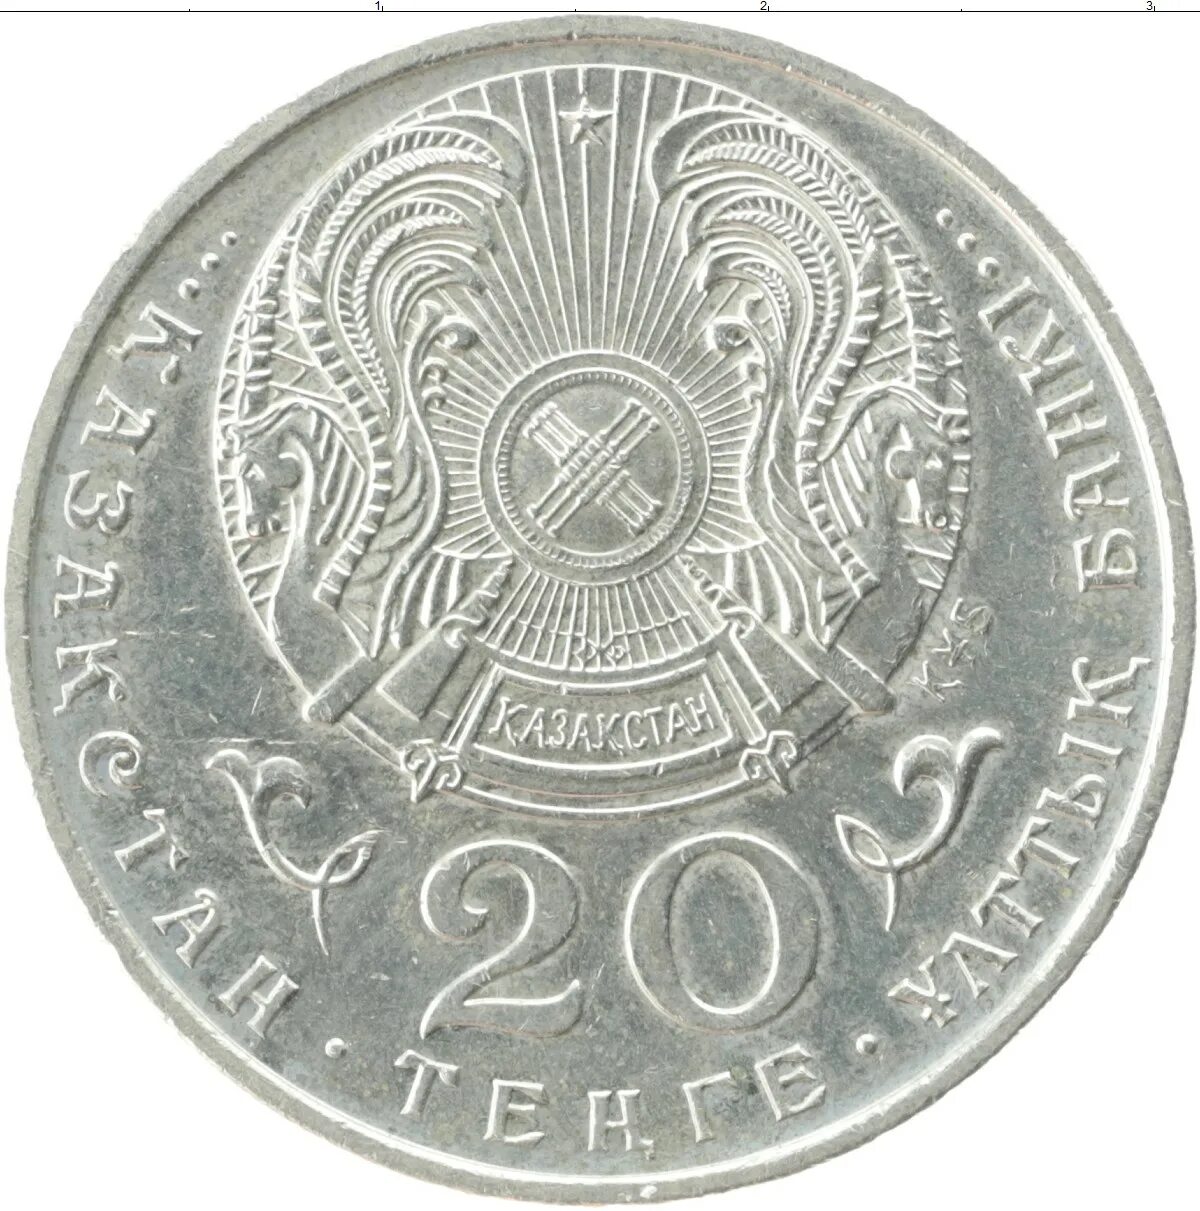 Пятьдесят тенге. Монеты Казахстана 20 тенге. Тенге монеты 20 тенге. 50 Тенге. 50 Тенге монета.